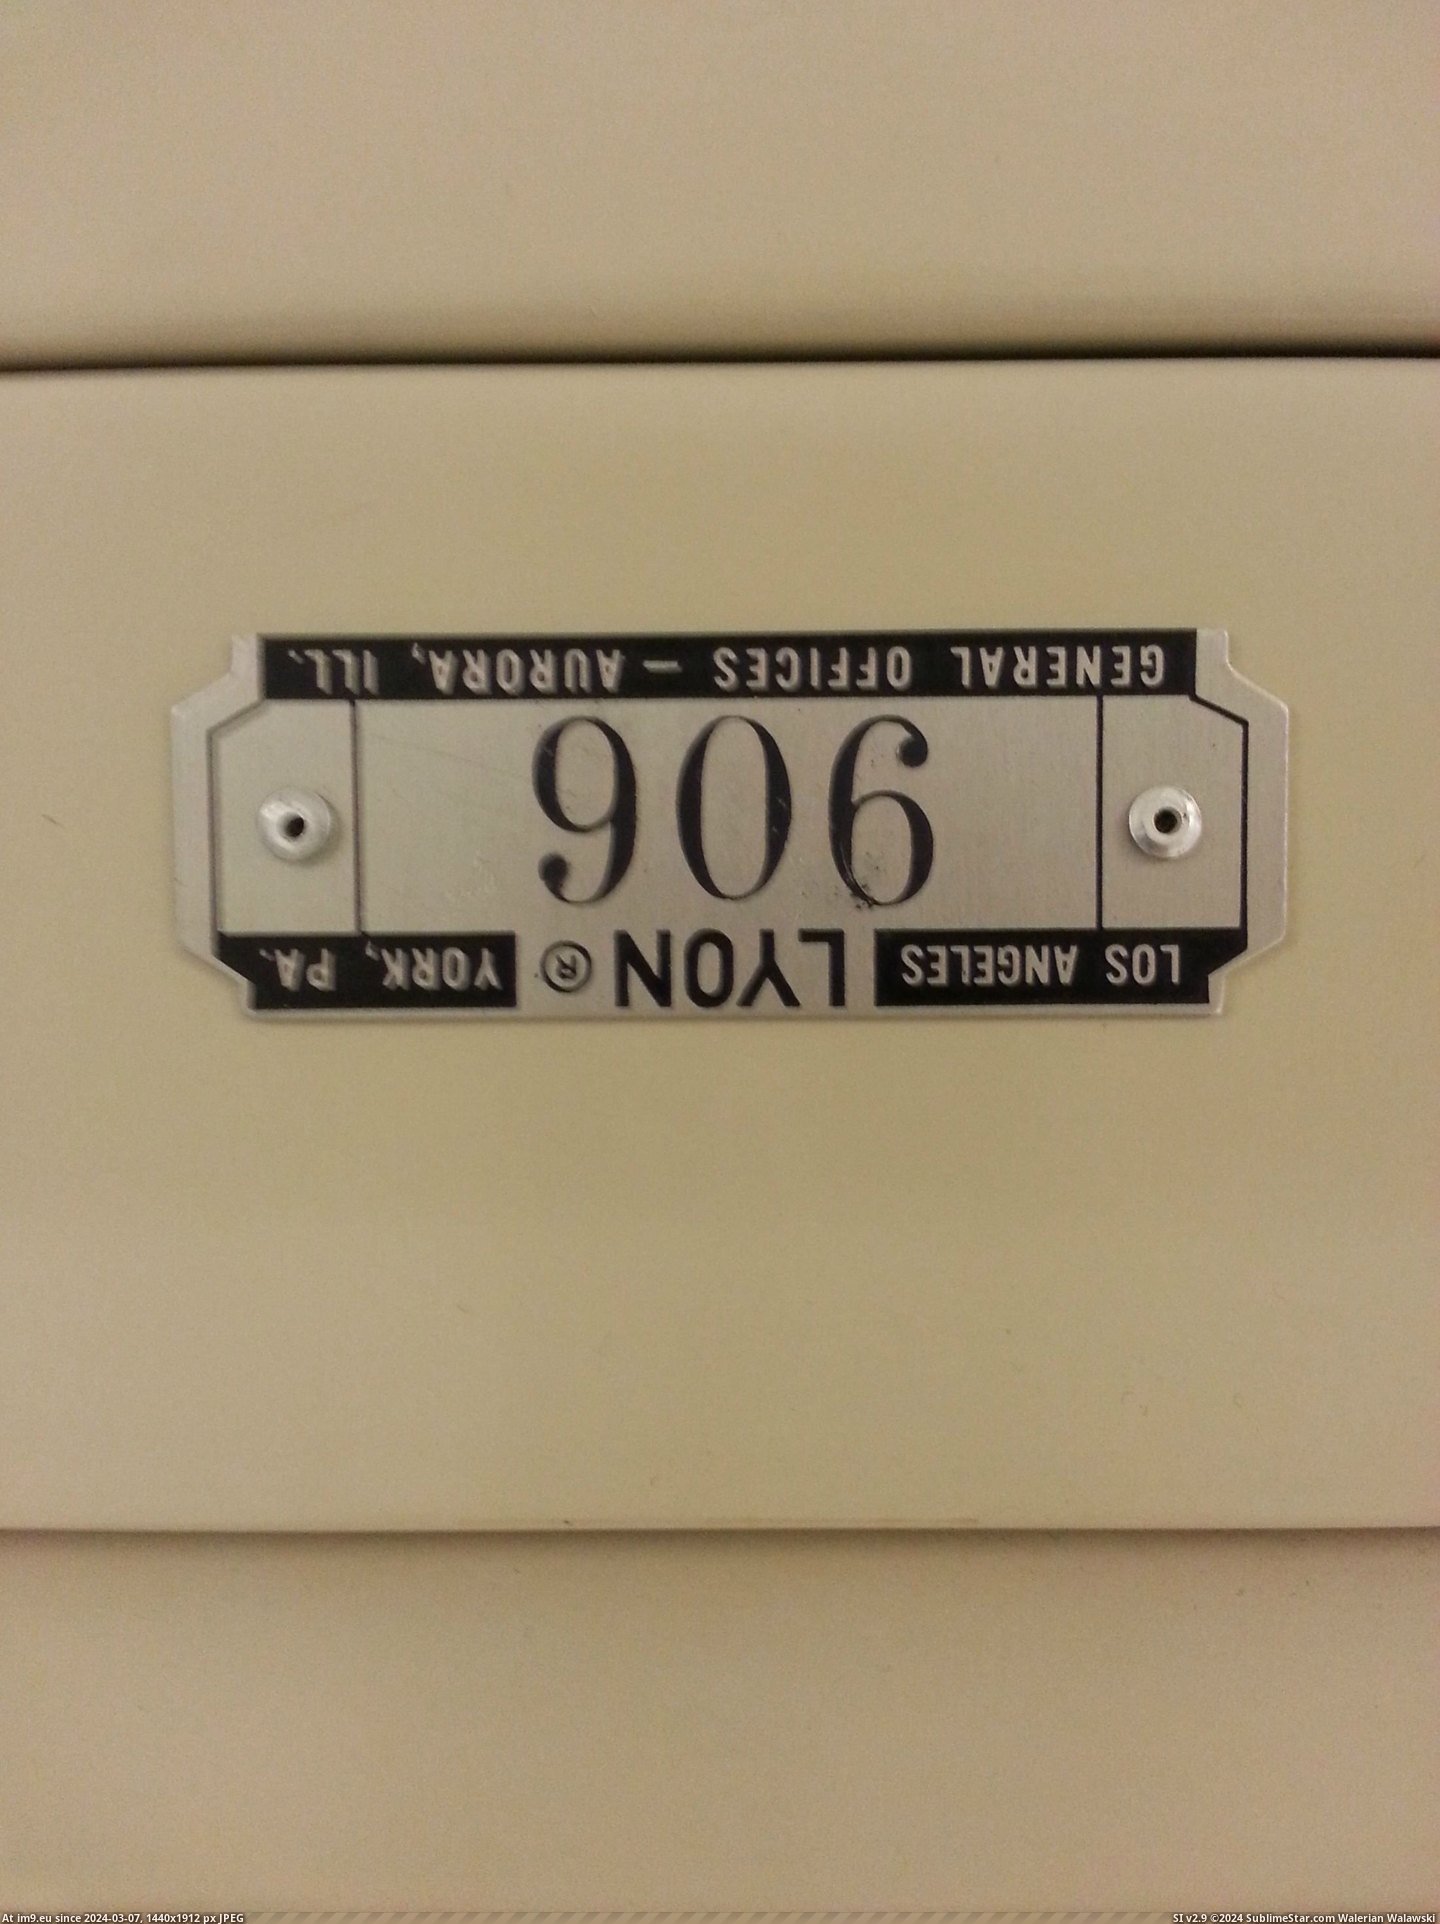 #Number #Upside #Plaque #Locker #Correct [Mildlyinteresting] The plaque on this locker is upside down but the number is still correct. Pic. (Изображение из альбом My r/MILDLYINTERESTING favs))